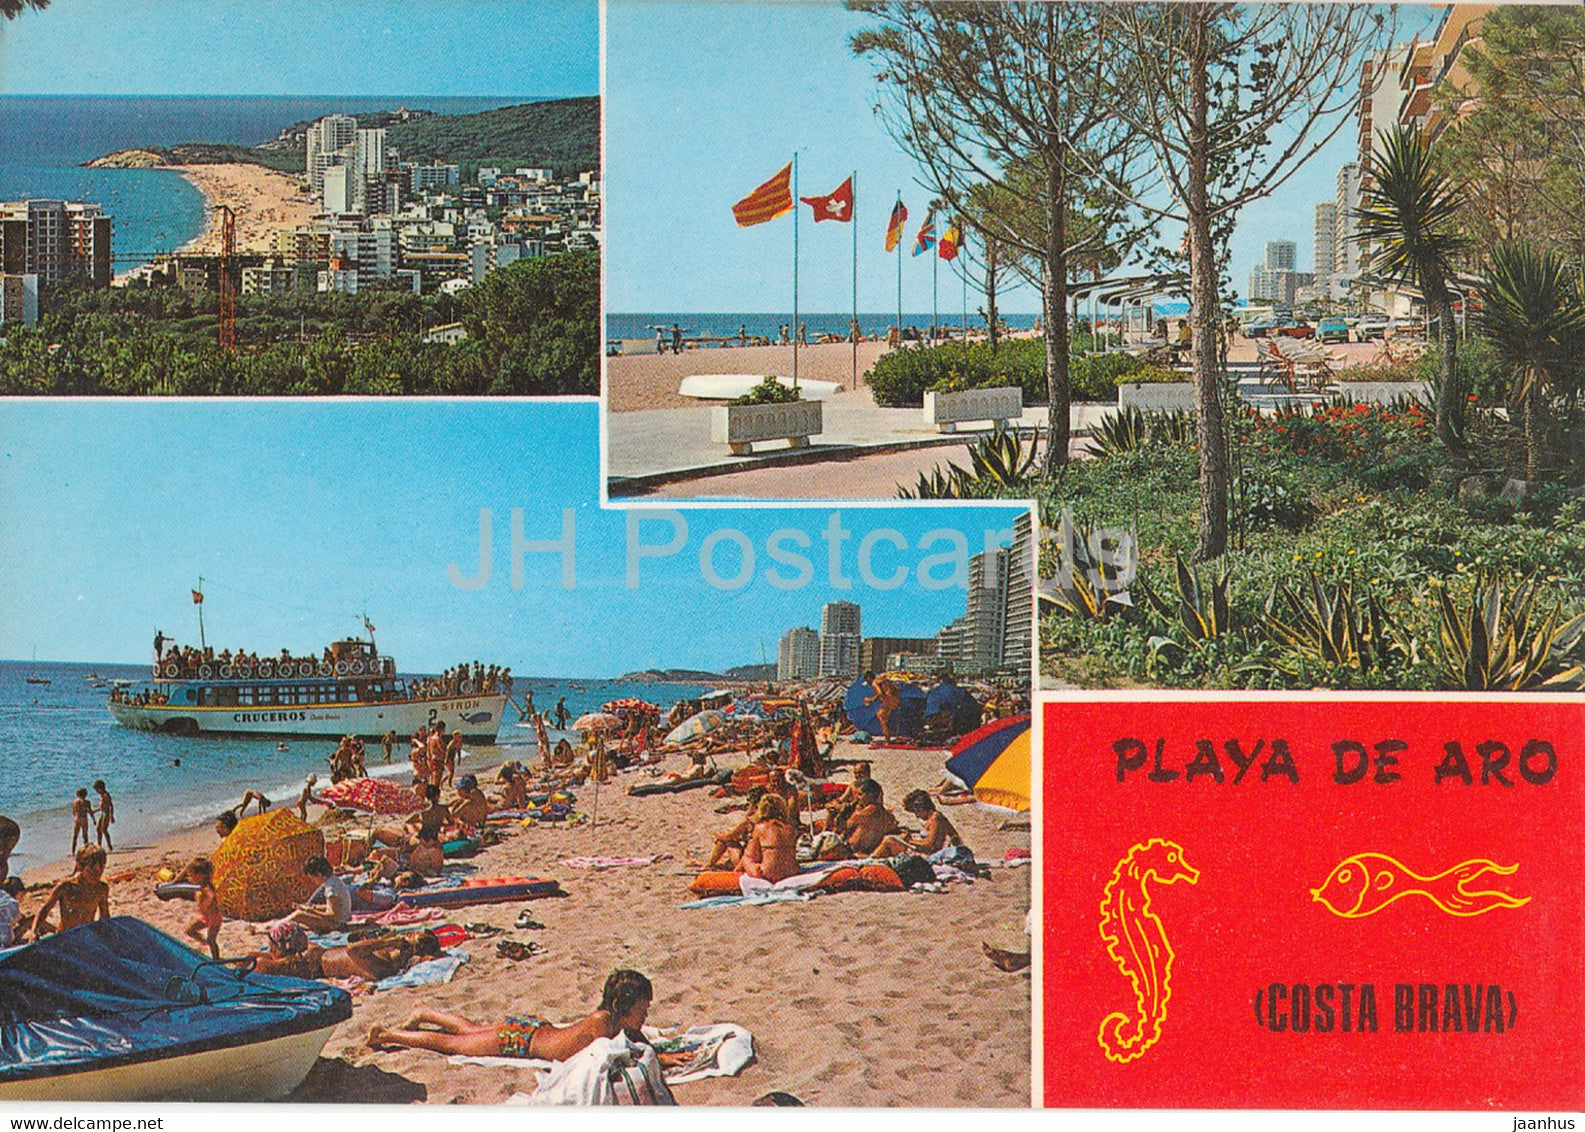 Playa de Aro - Costa Brava - Diversos Aspectos - Various Sightseen - passenger boat - beach - multiview - Spain - used - JH Postcards